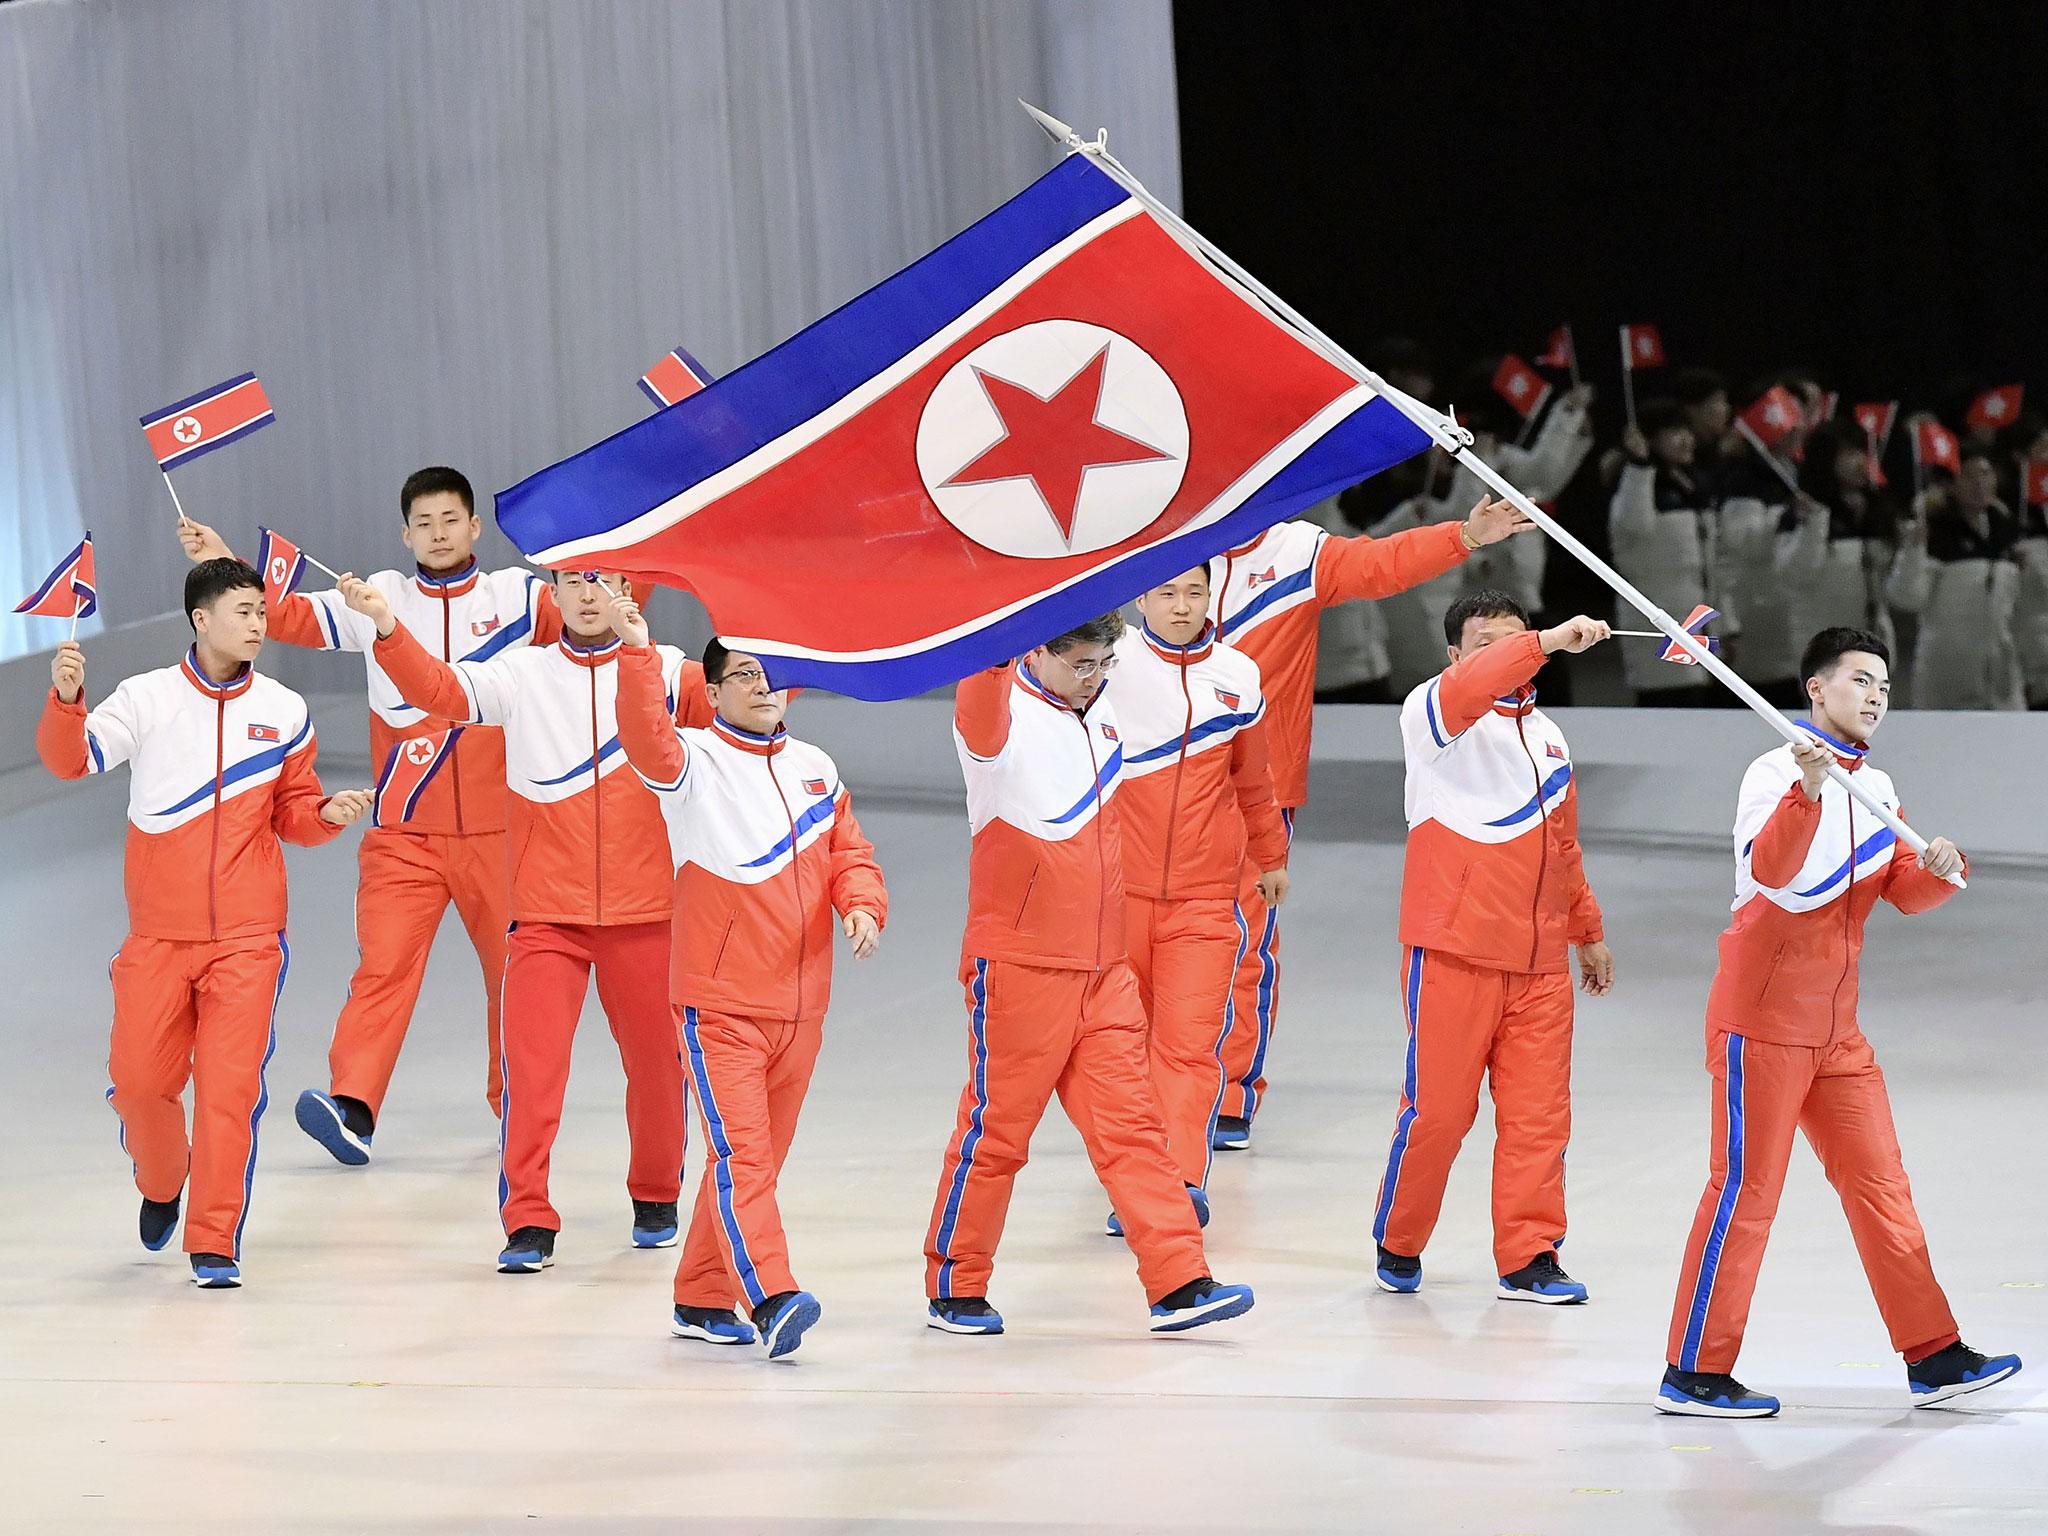 North Korea To Send 22 Athletes To Winter Olympics Ioc Confirms The